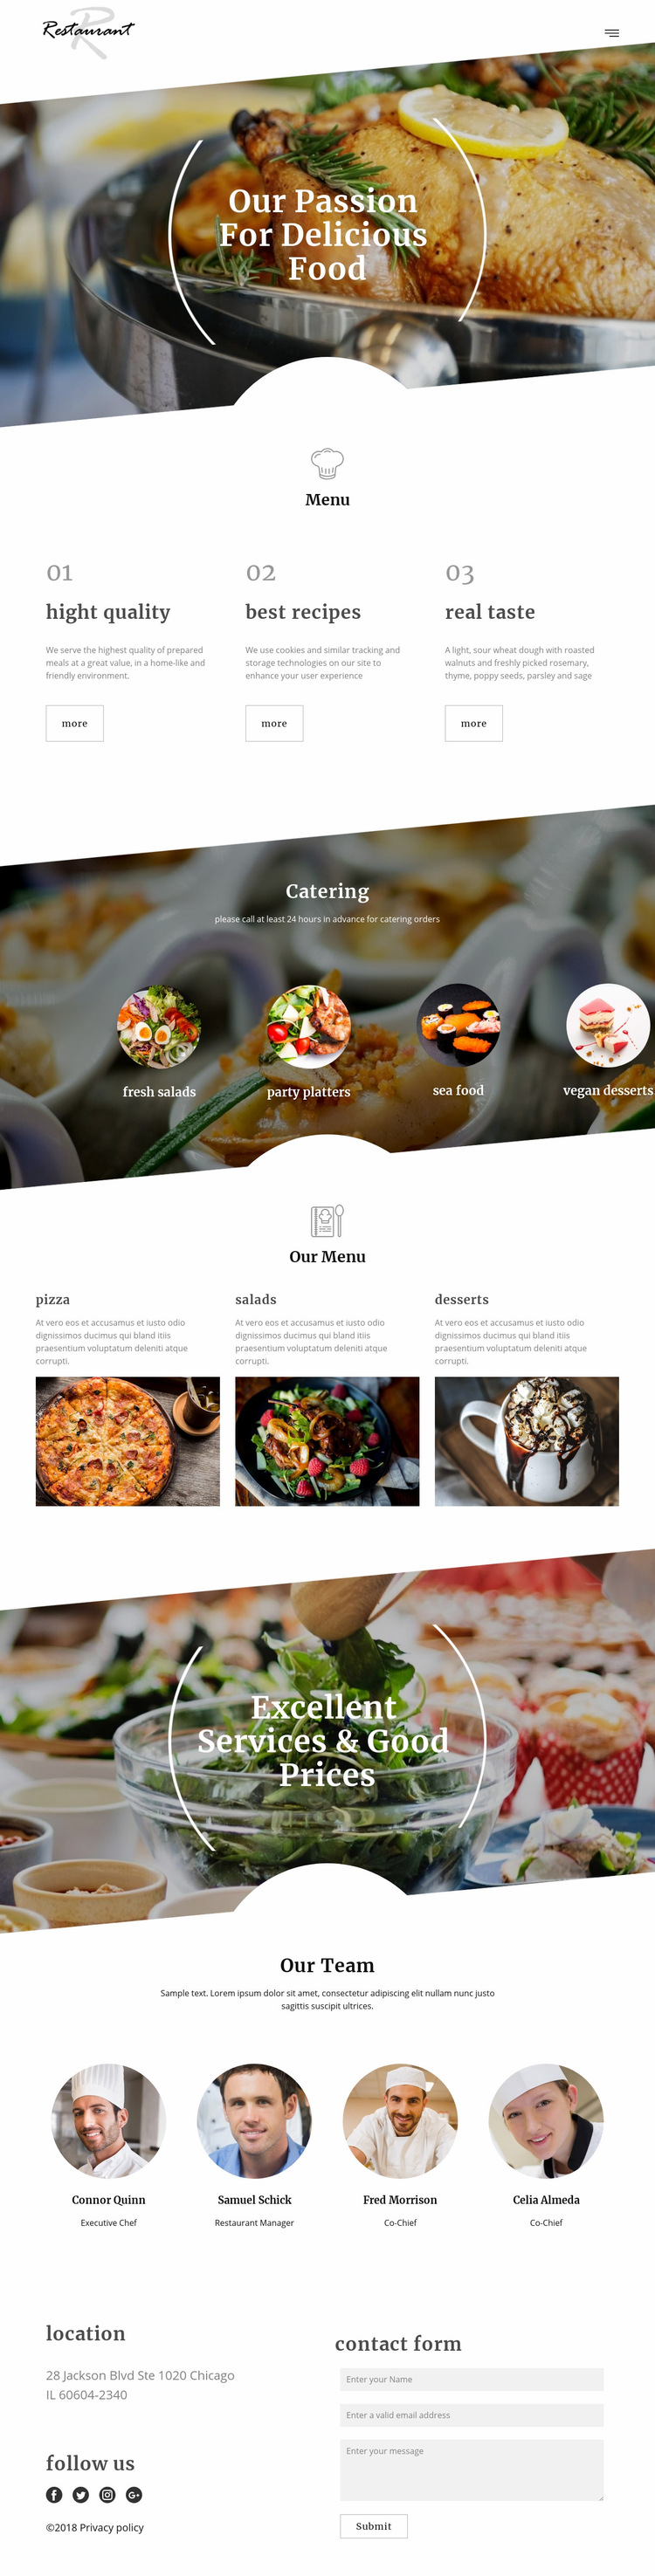 Executive chef recipes Web Page Design